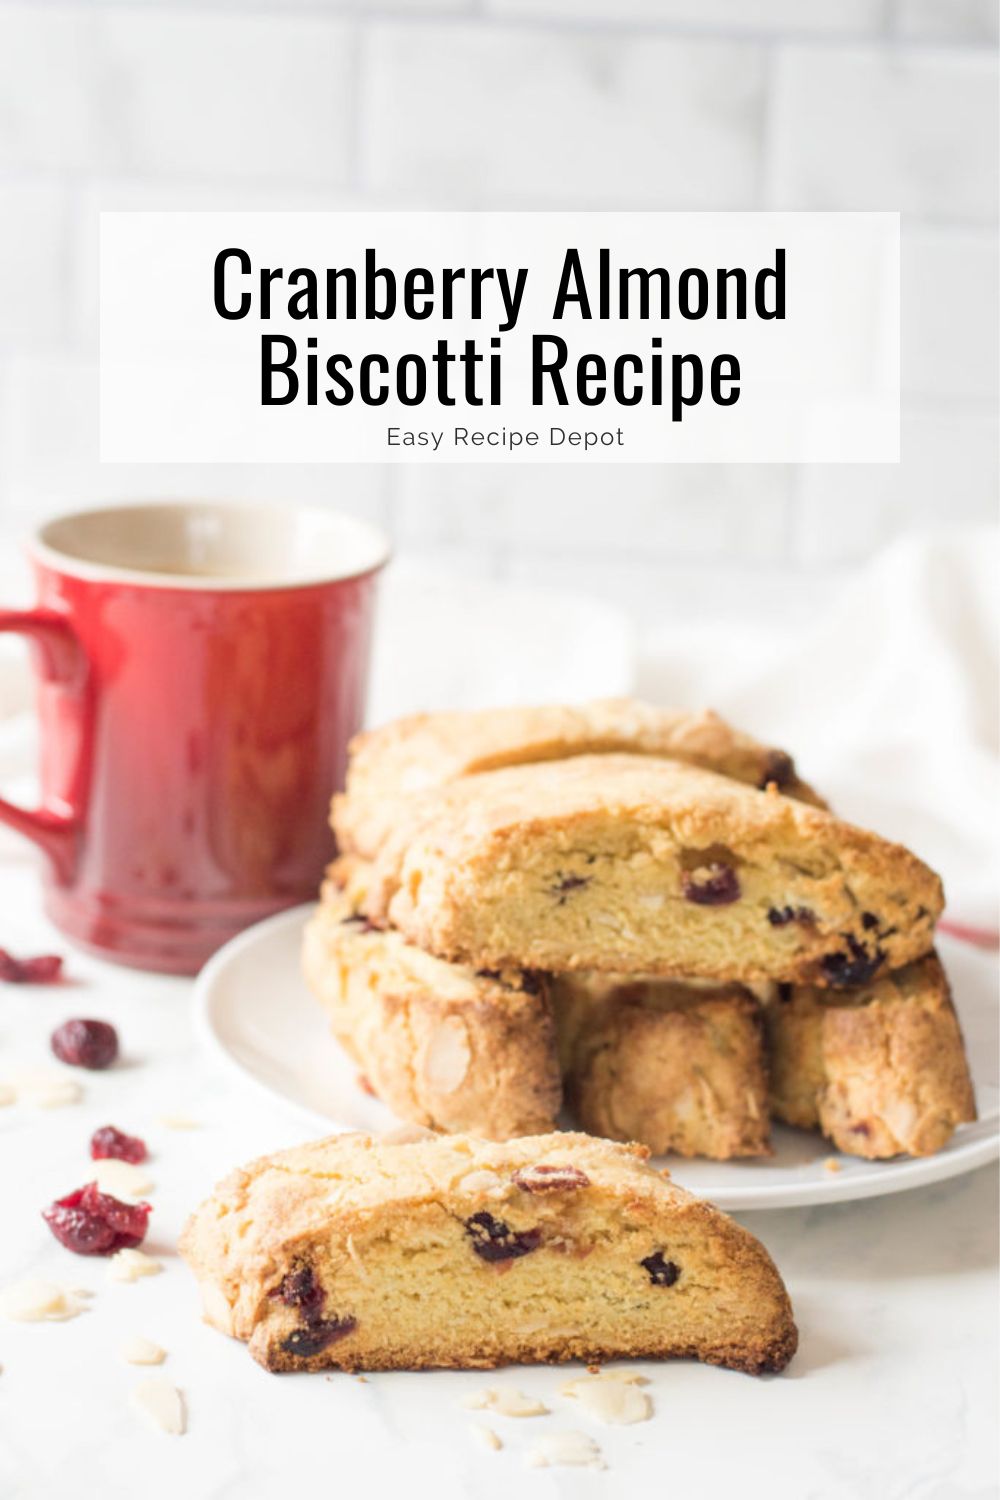 Cranberry almond biscotti recipe.